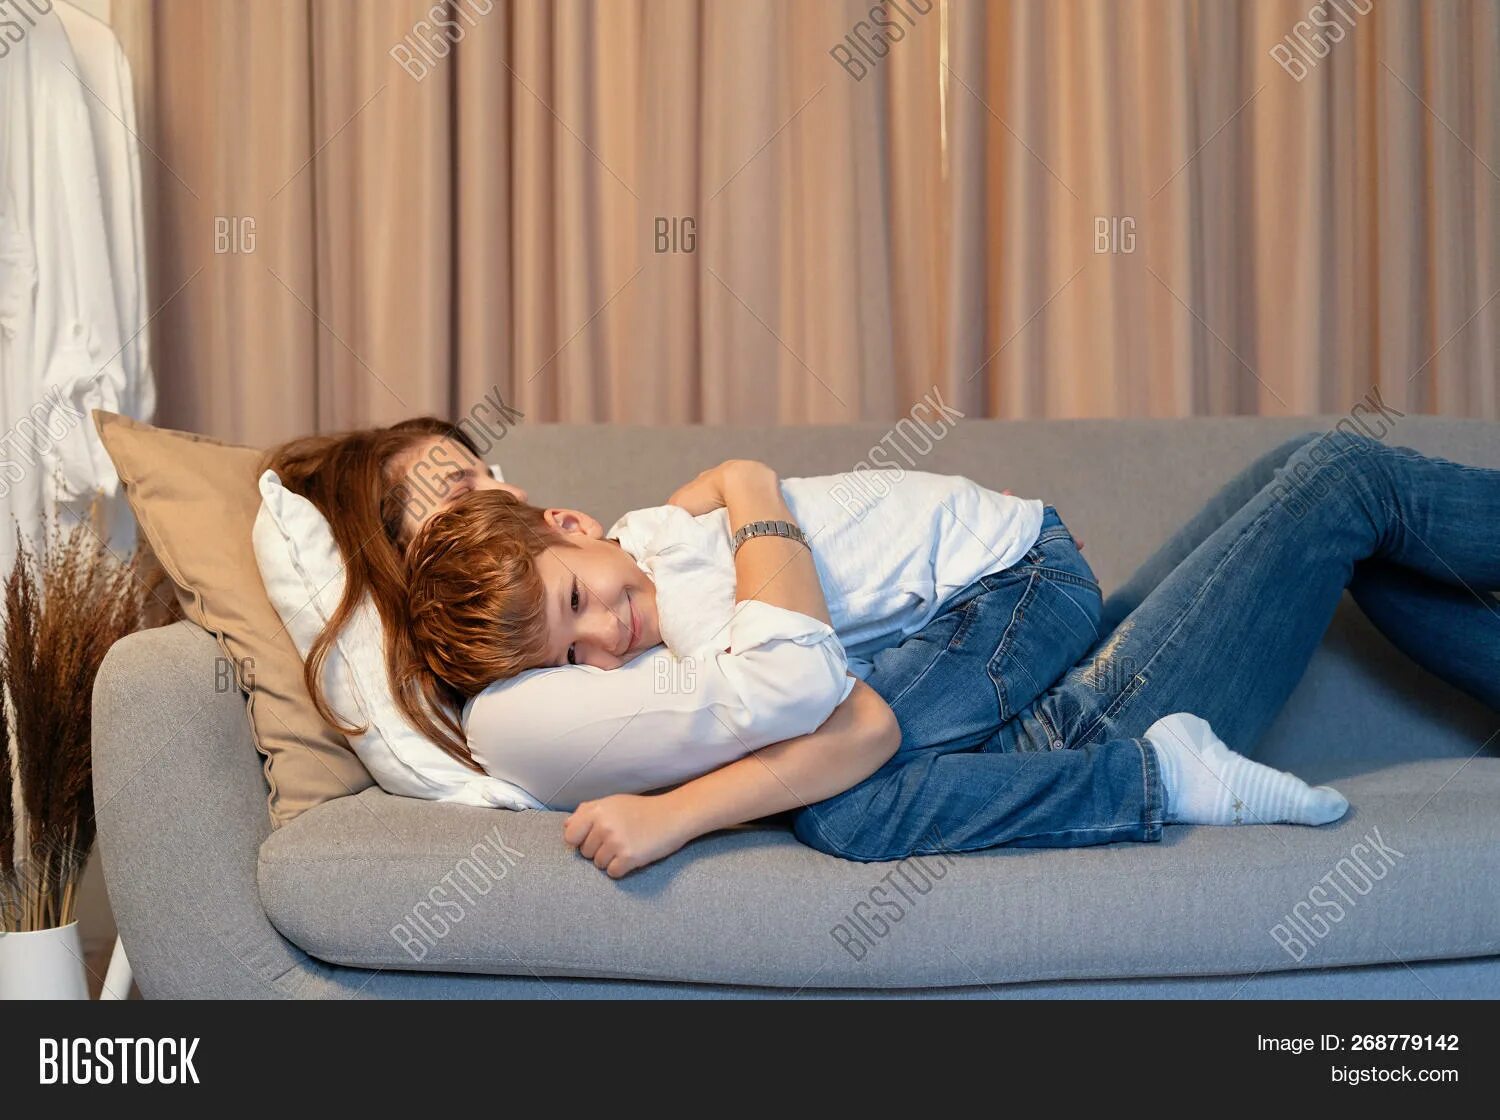 Фотосессия на диване с сыном и мама. Мама с ребенком на диване. Мать обнимает сына на диване. Мать сидит с сыном на диване. Мама друга на диване